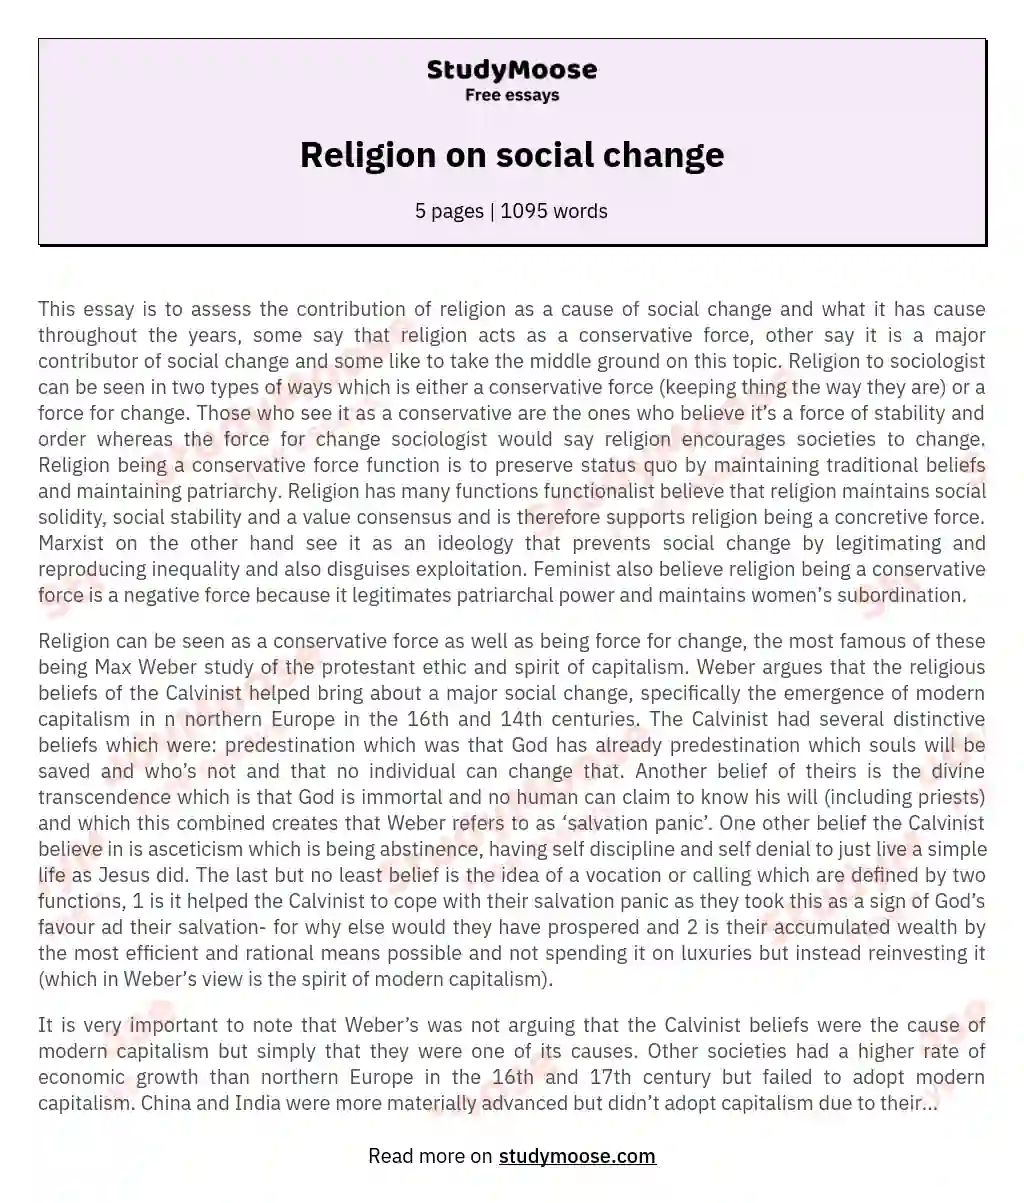 Religion on social change essay